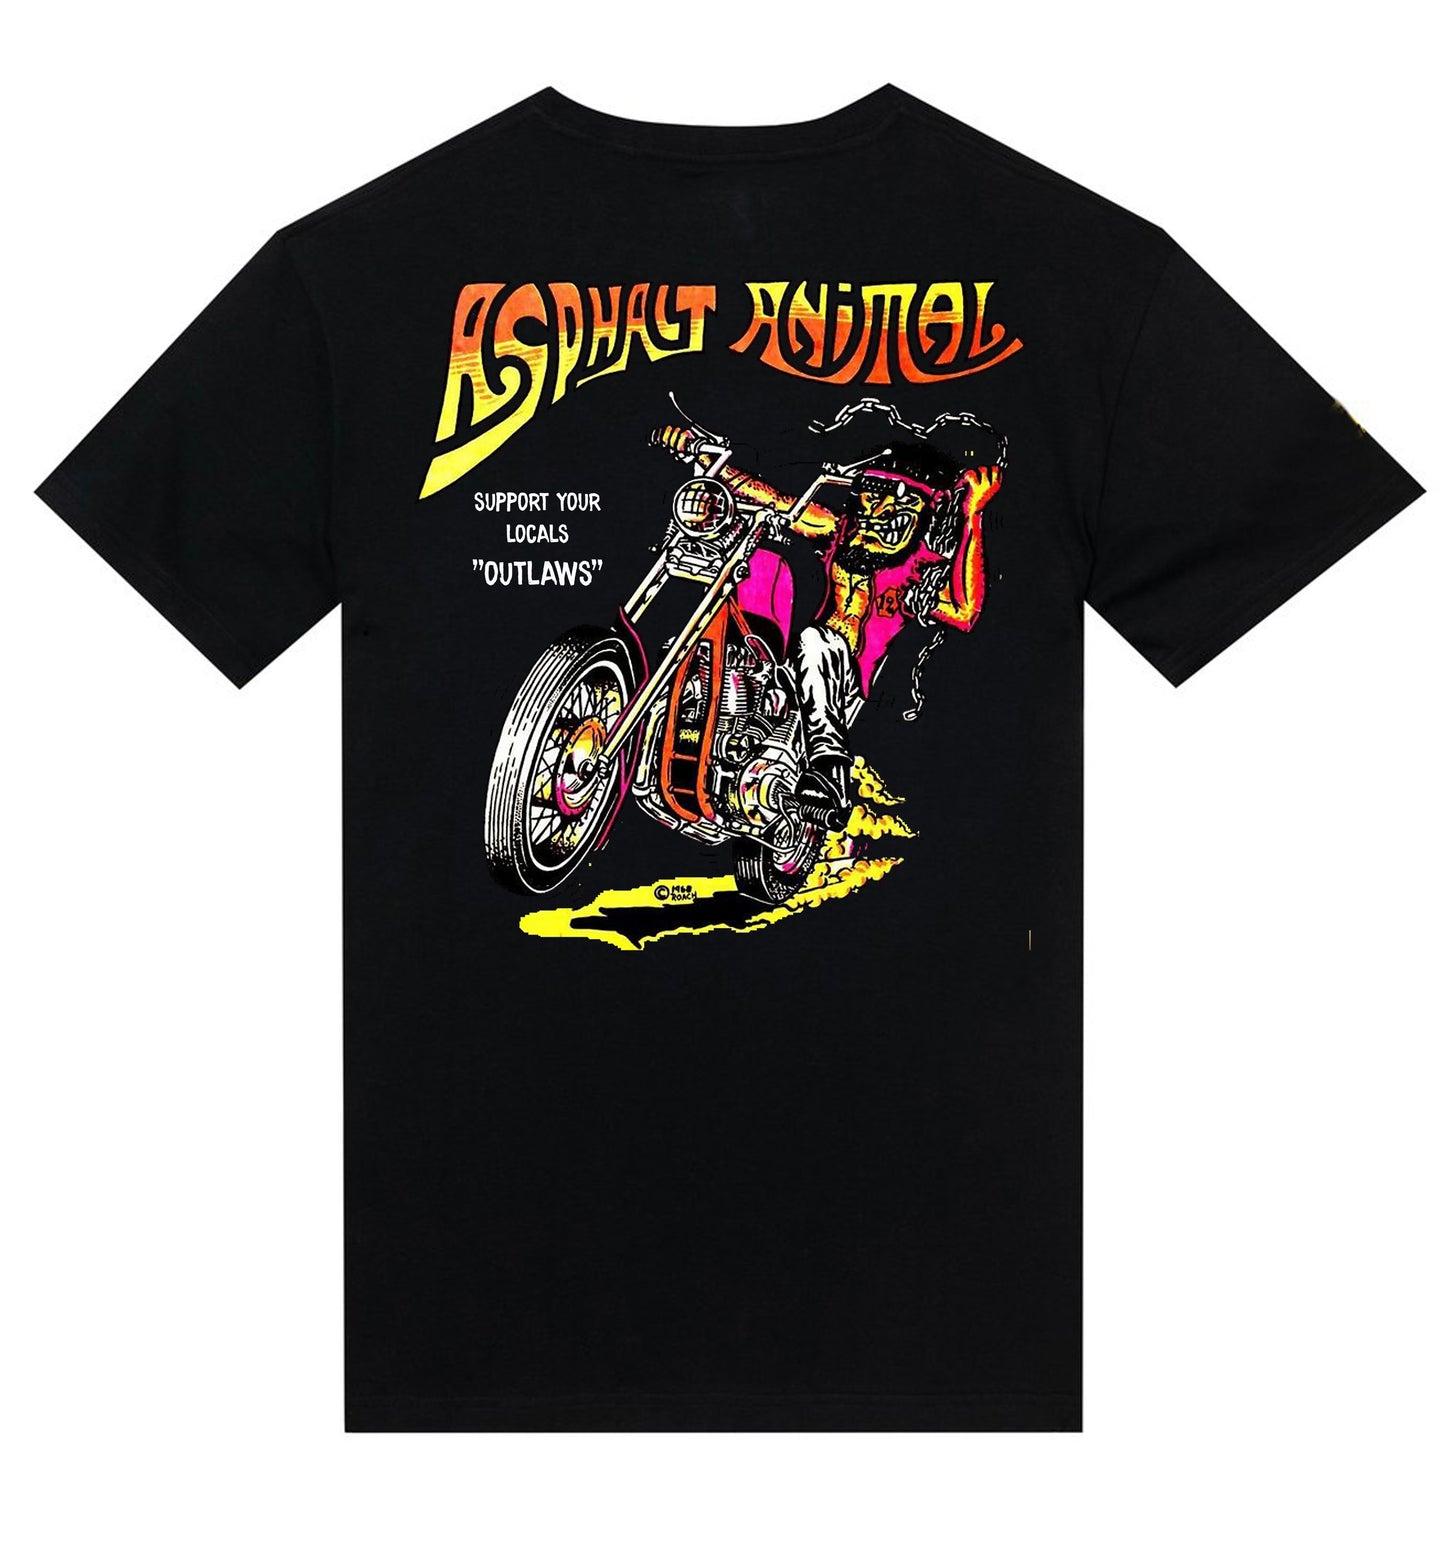 T-shirt "Asphalt Animal" in loving memory of Roach 1967